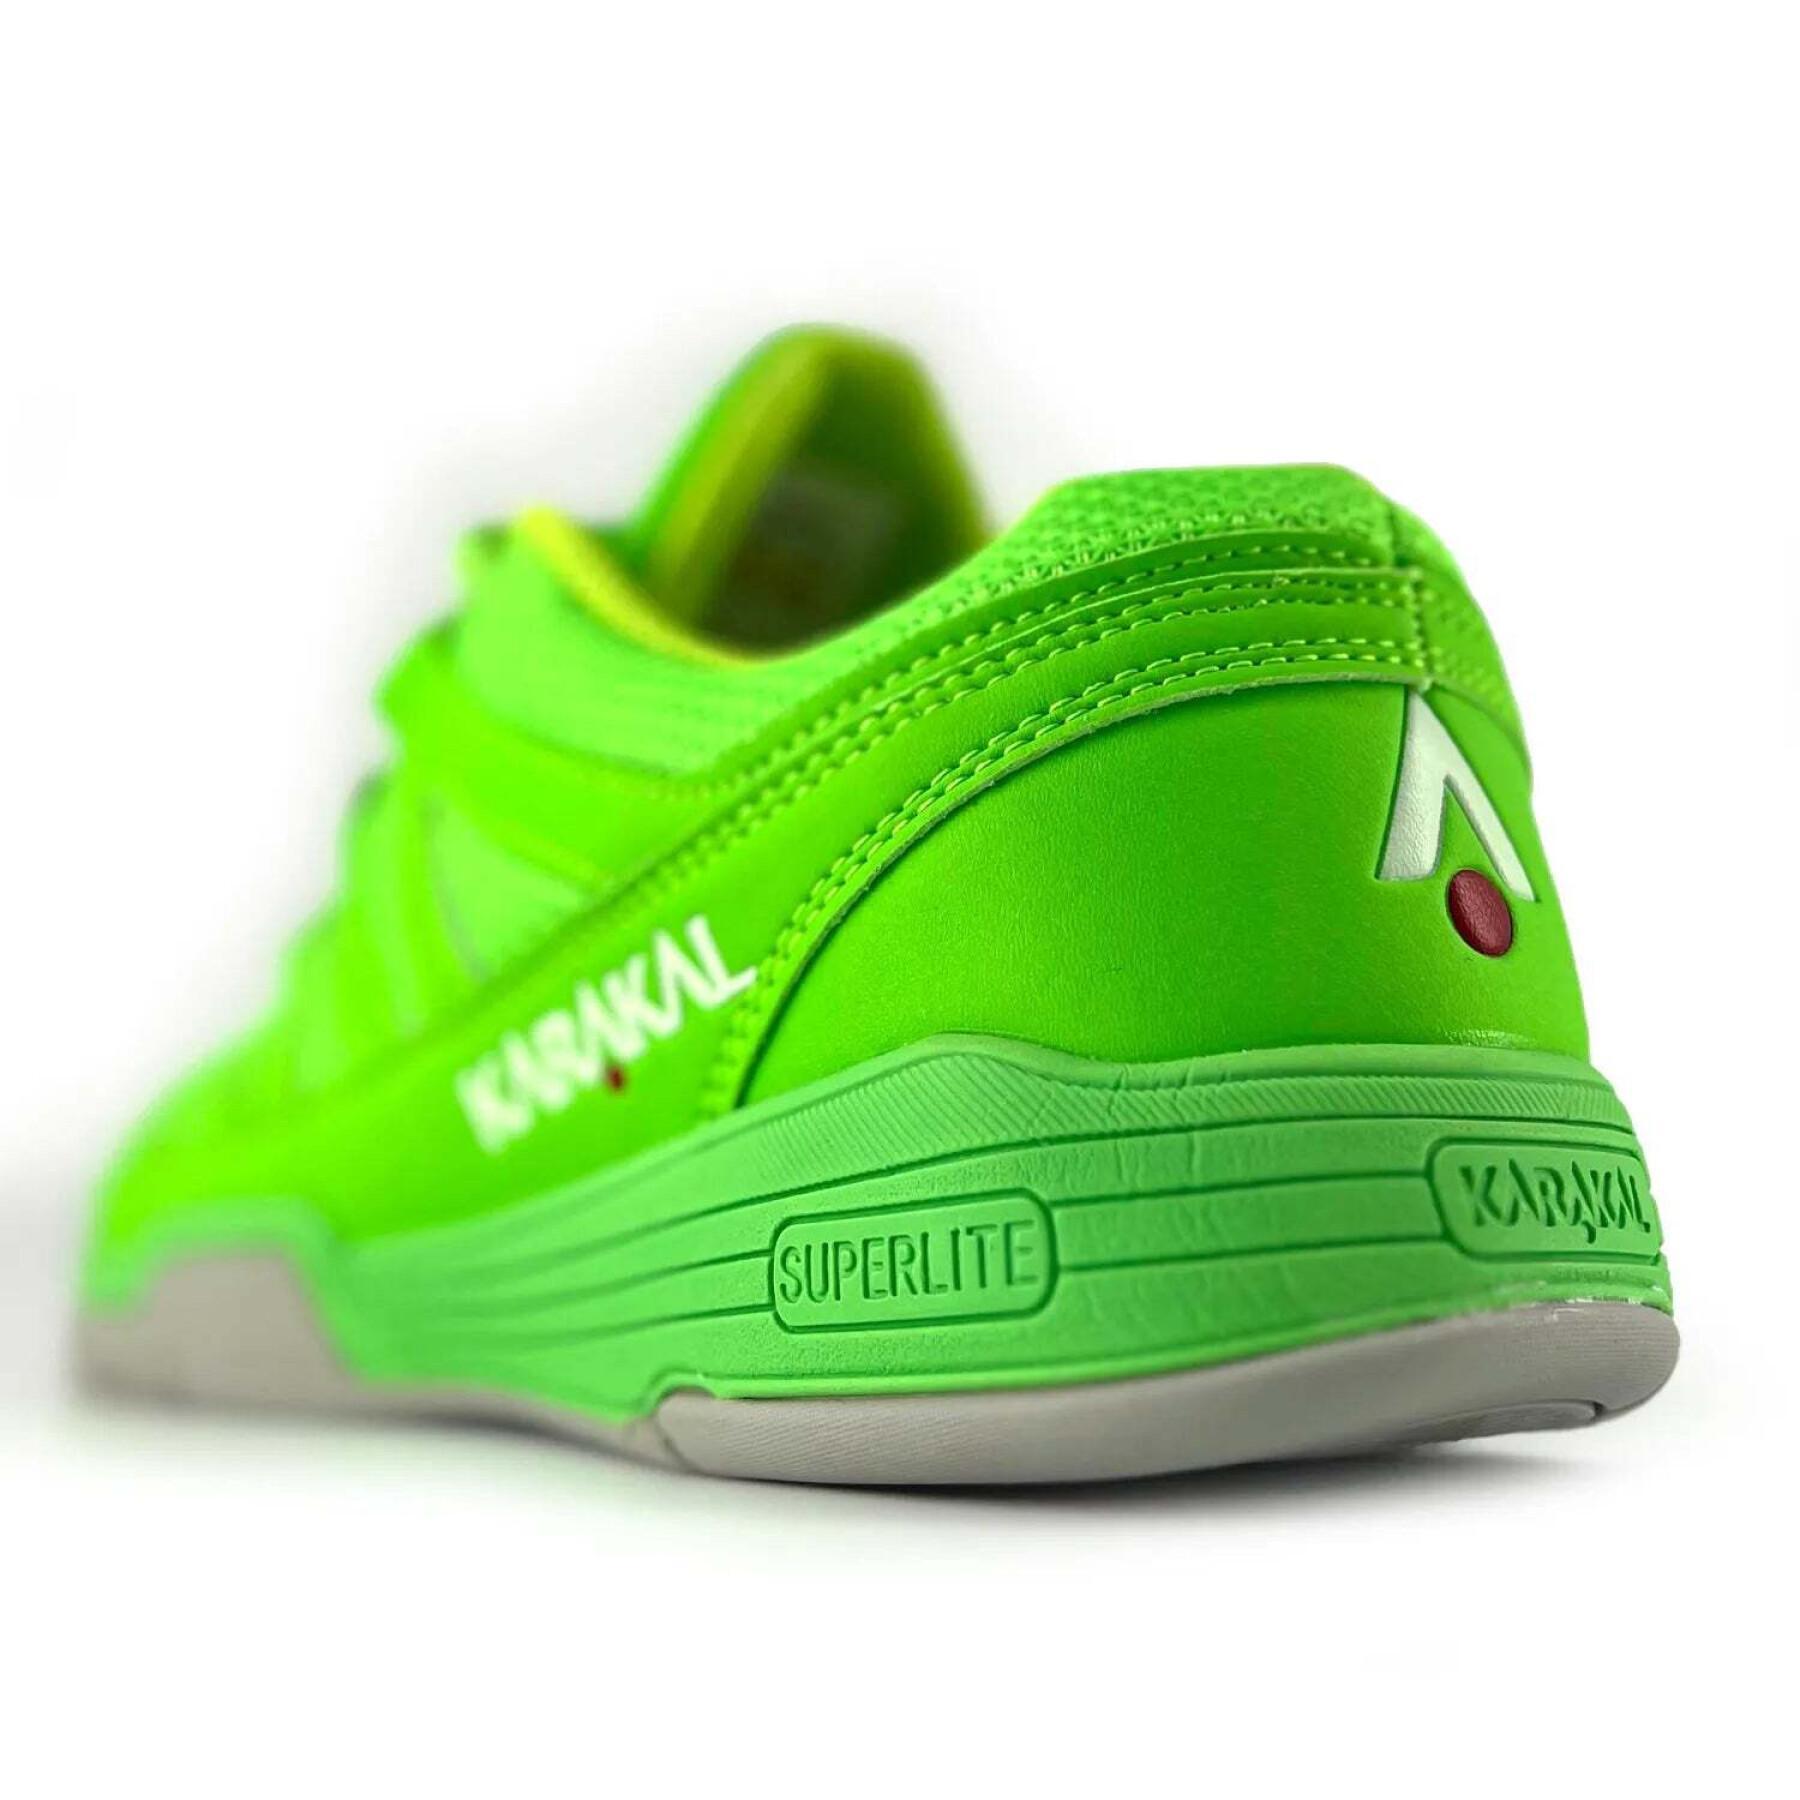 Karakal KF Pro Lite Badminton Shoes - Green - Rear